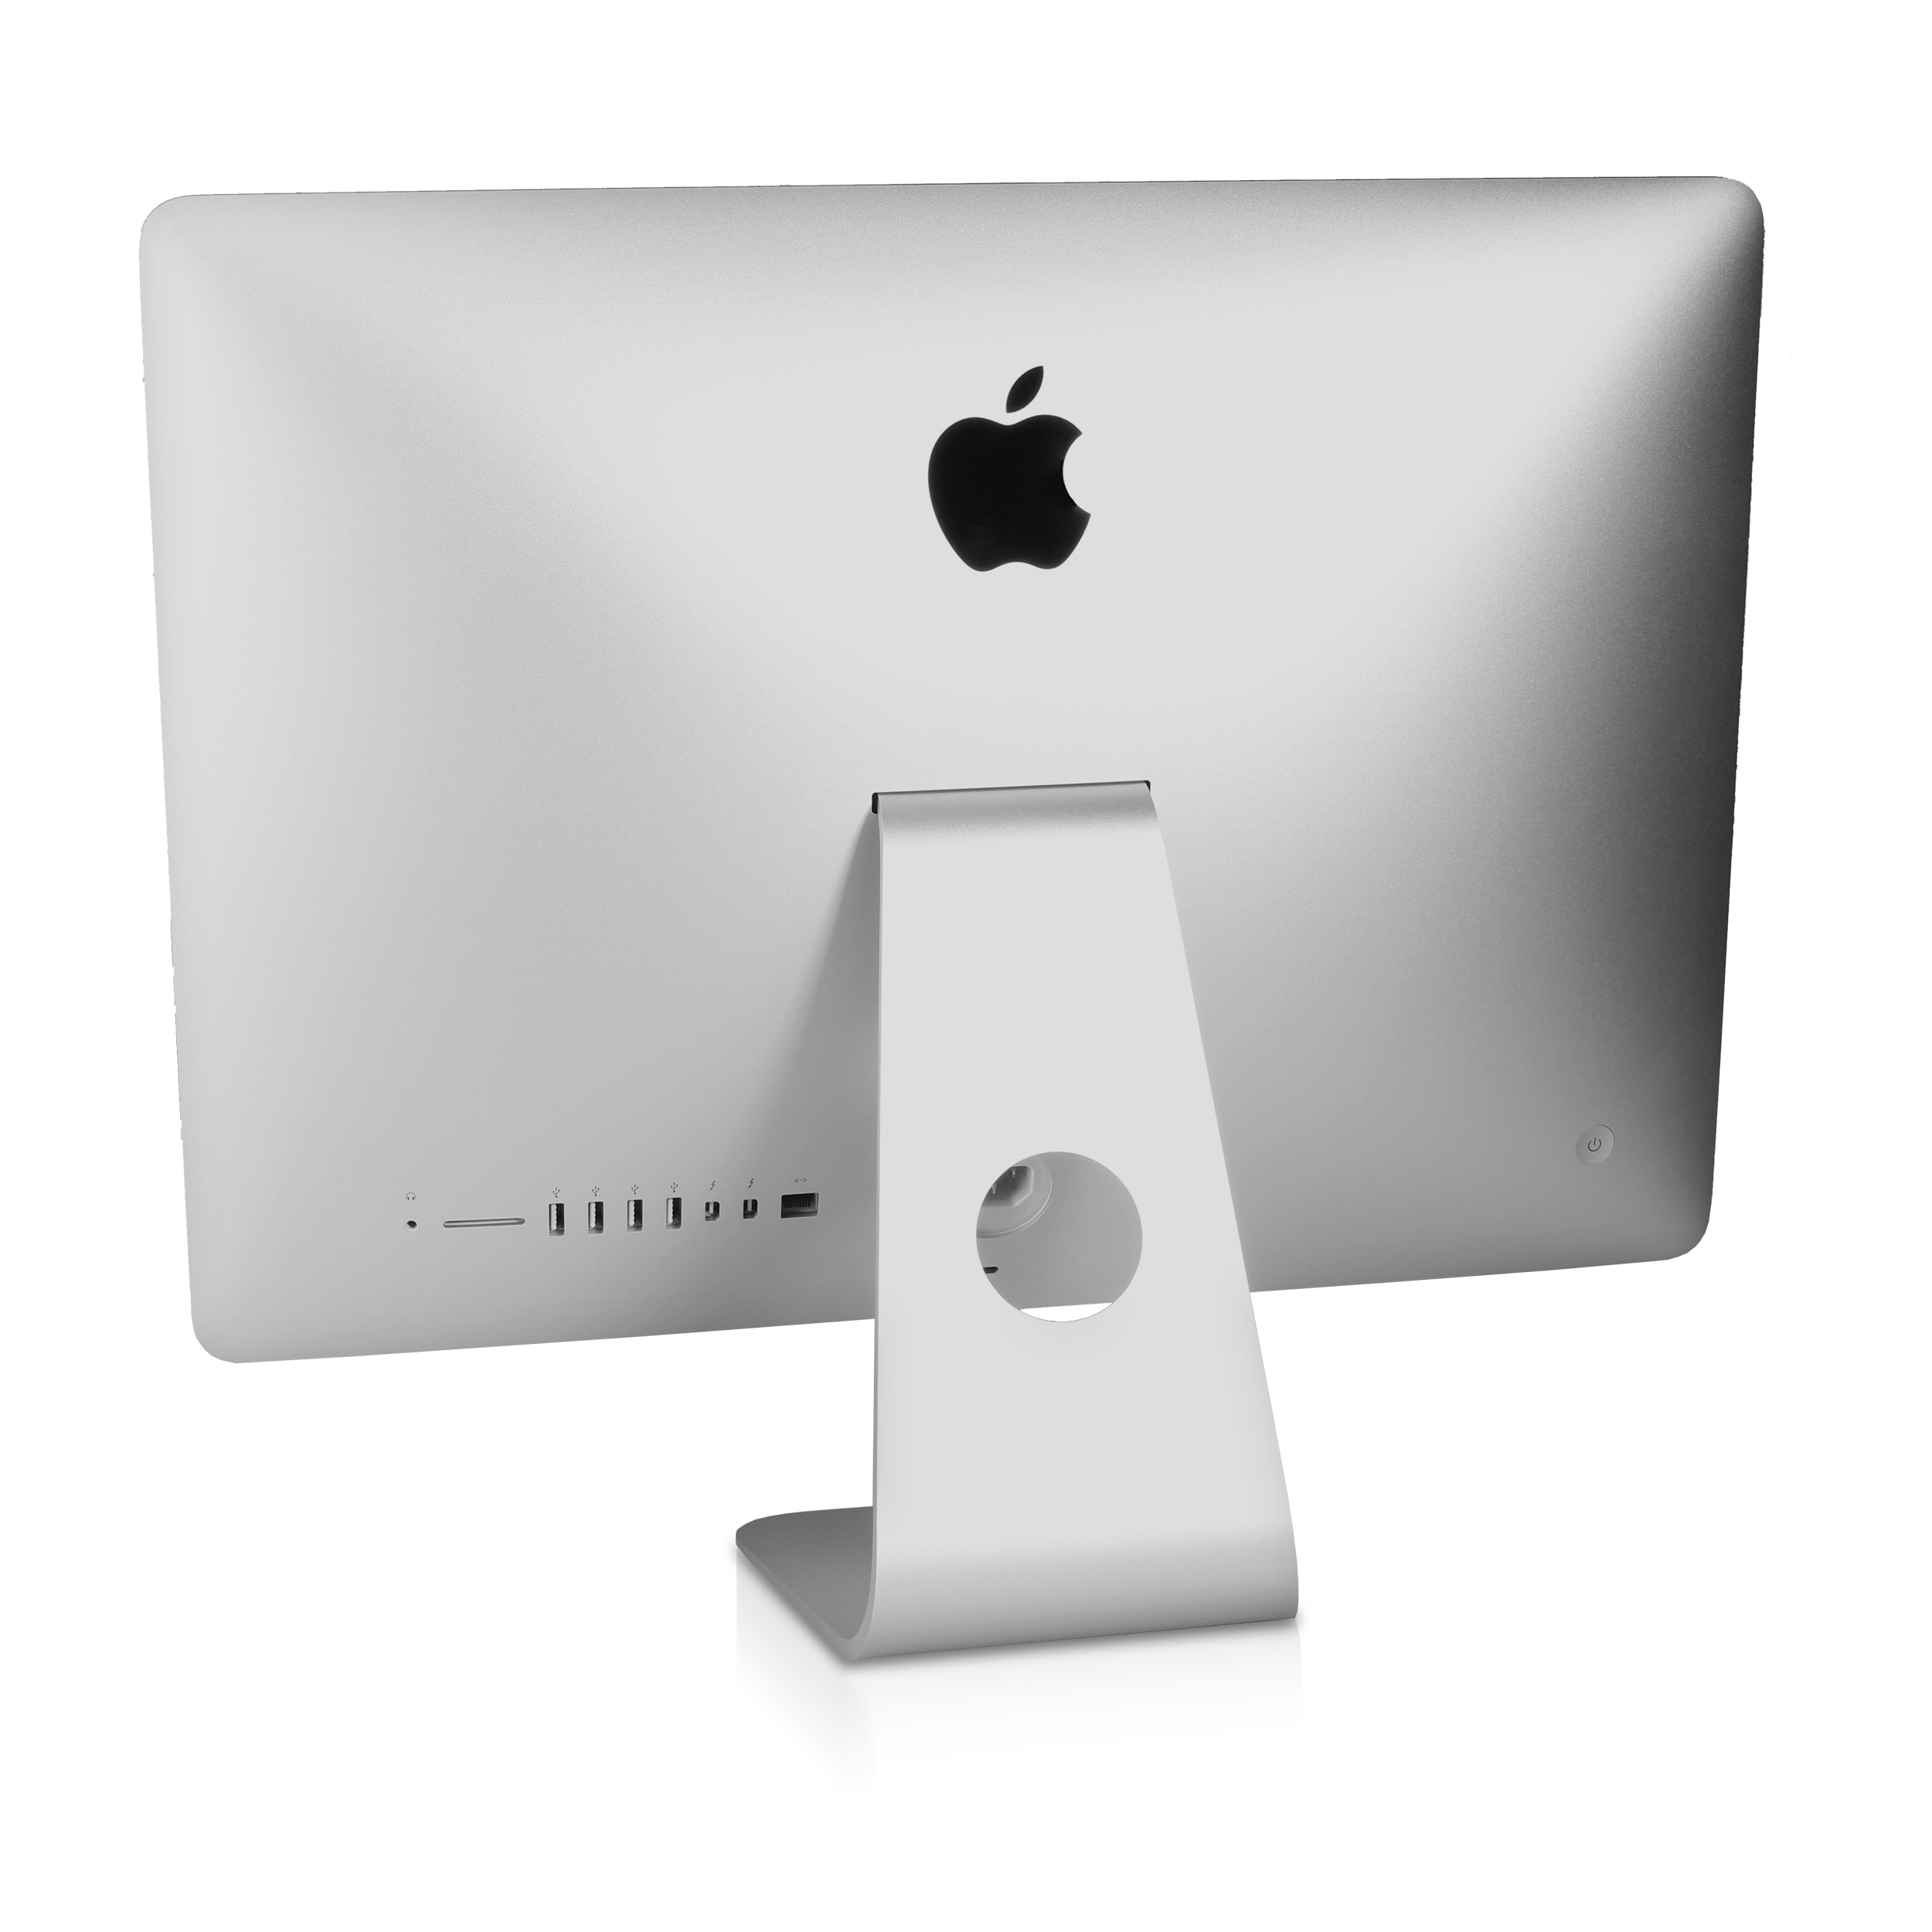 Apple iMac16,2